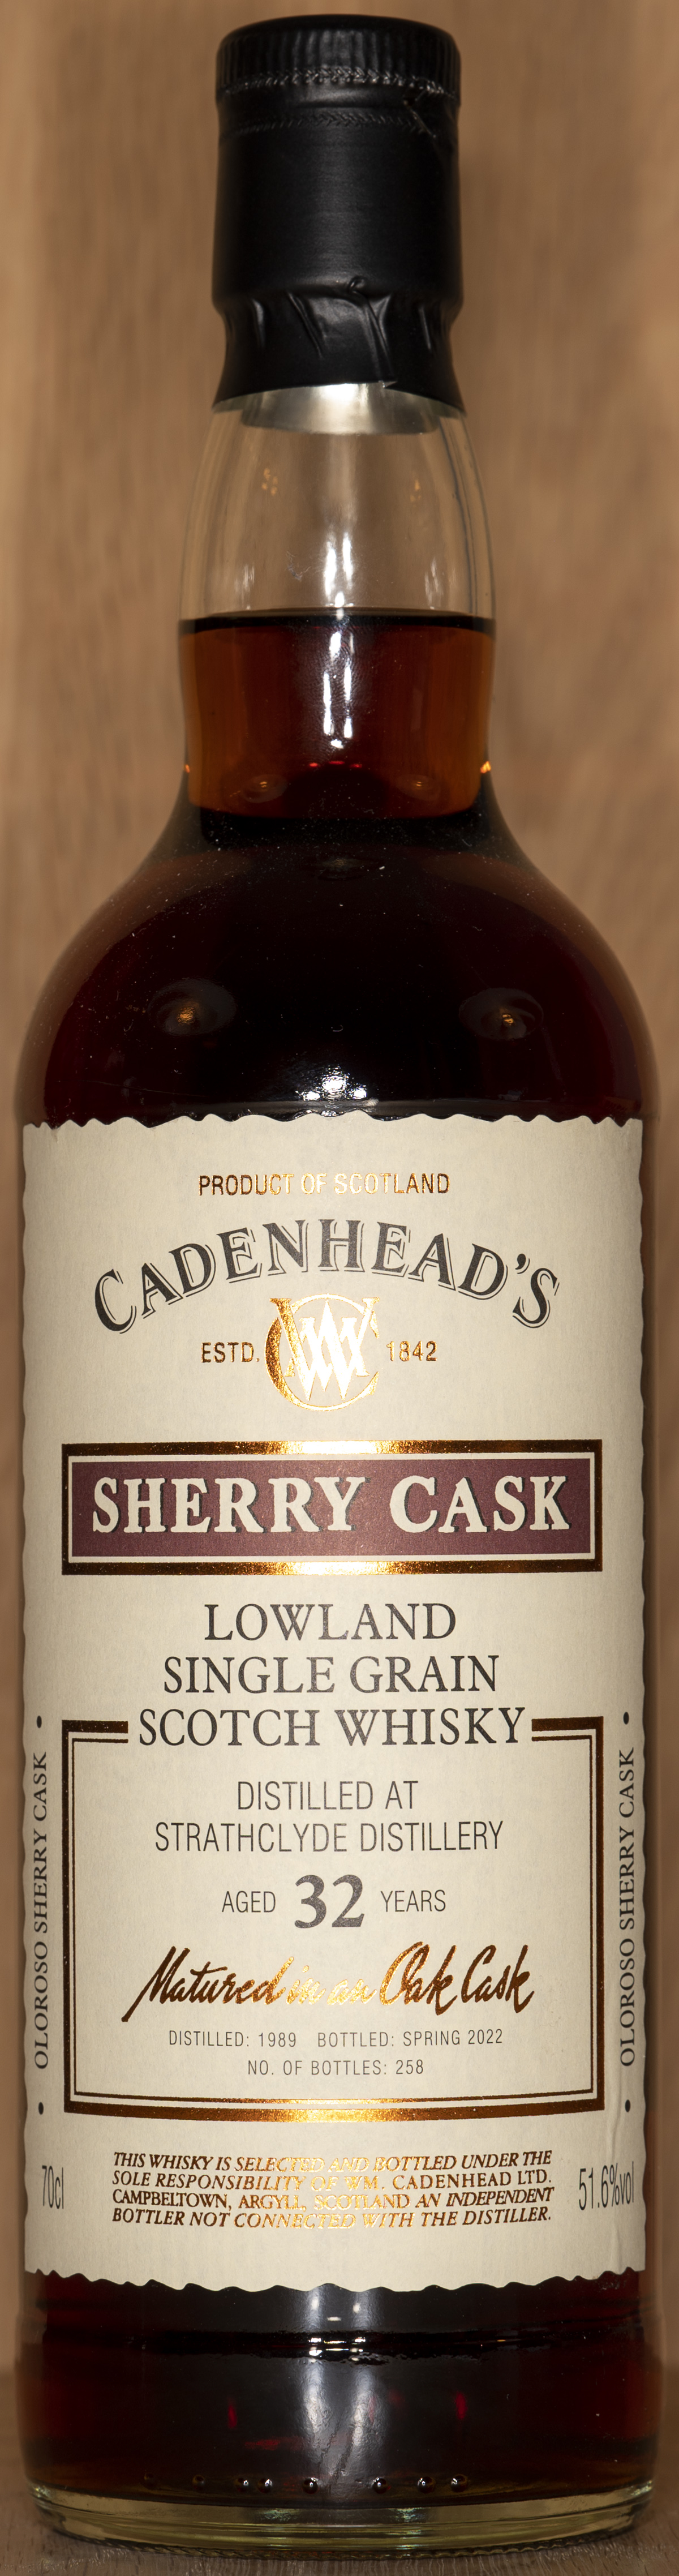 Billede: DSC_5033 - Cadenheads Sherry Cask Strathclyde 32 - bottle front.jpg